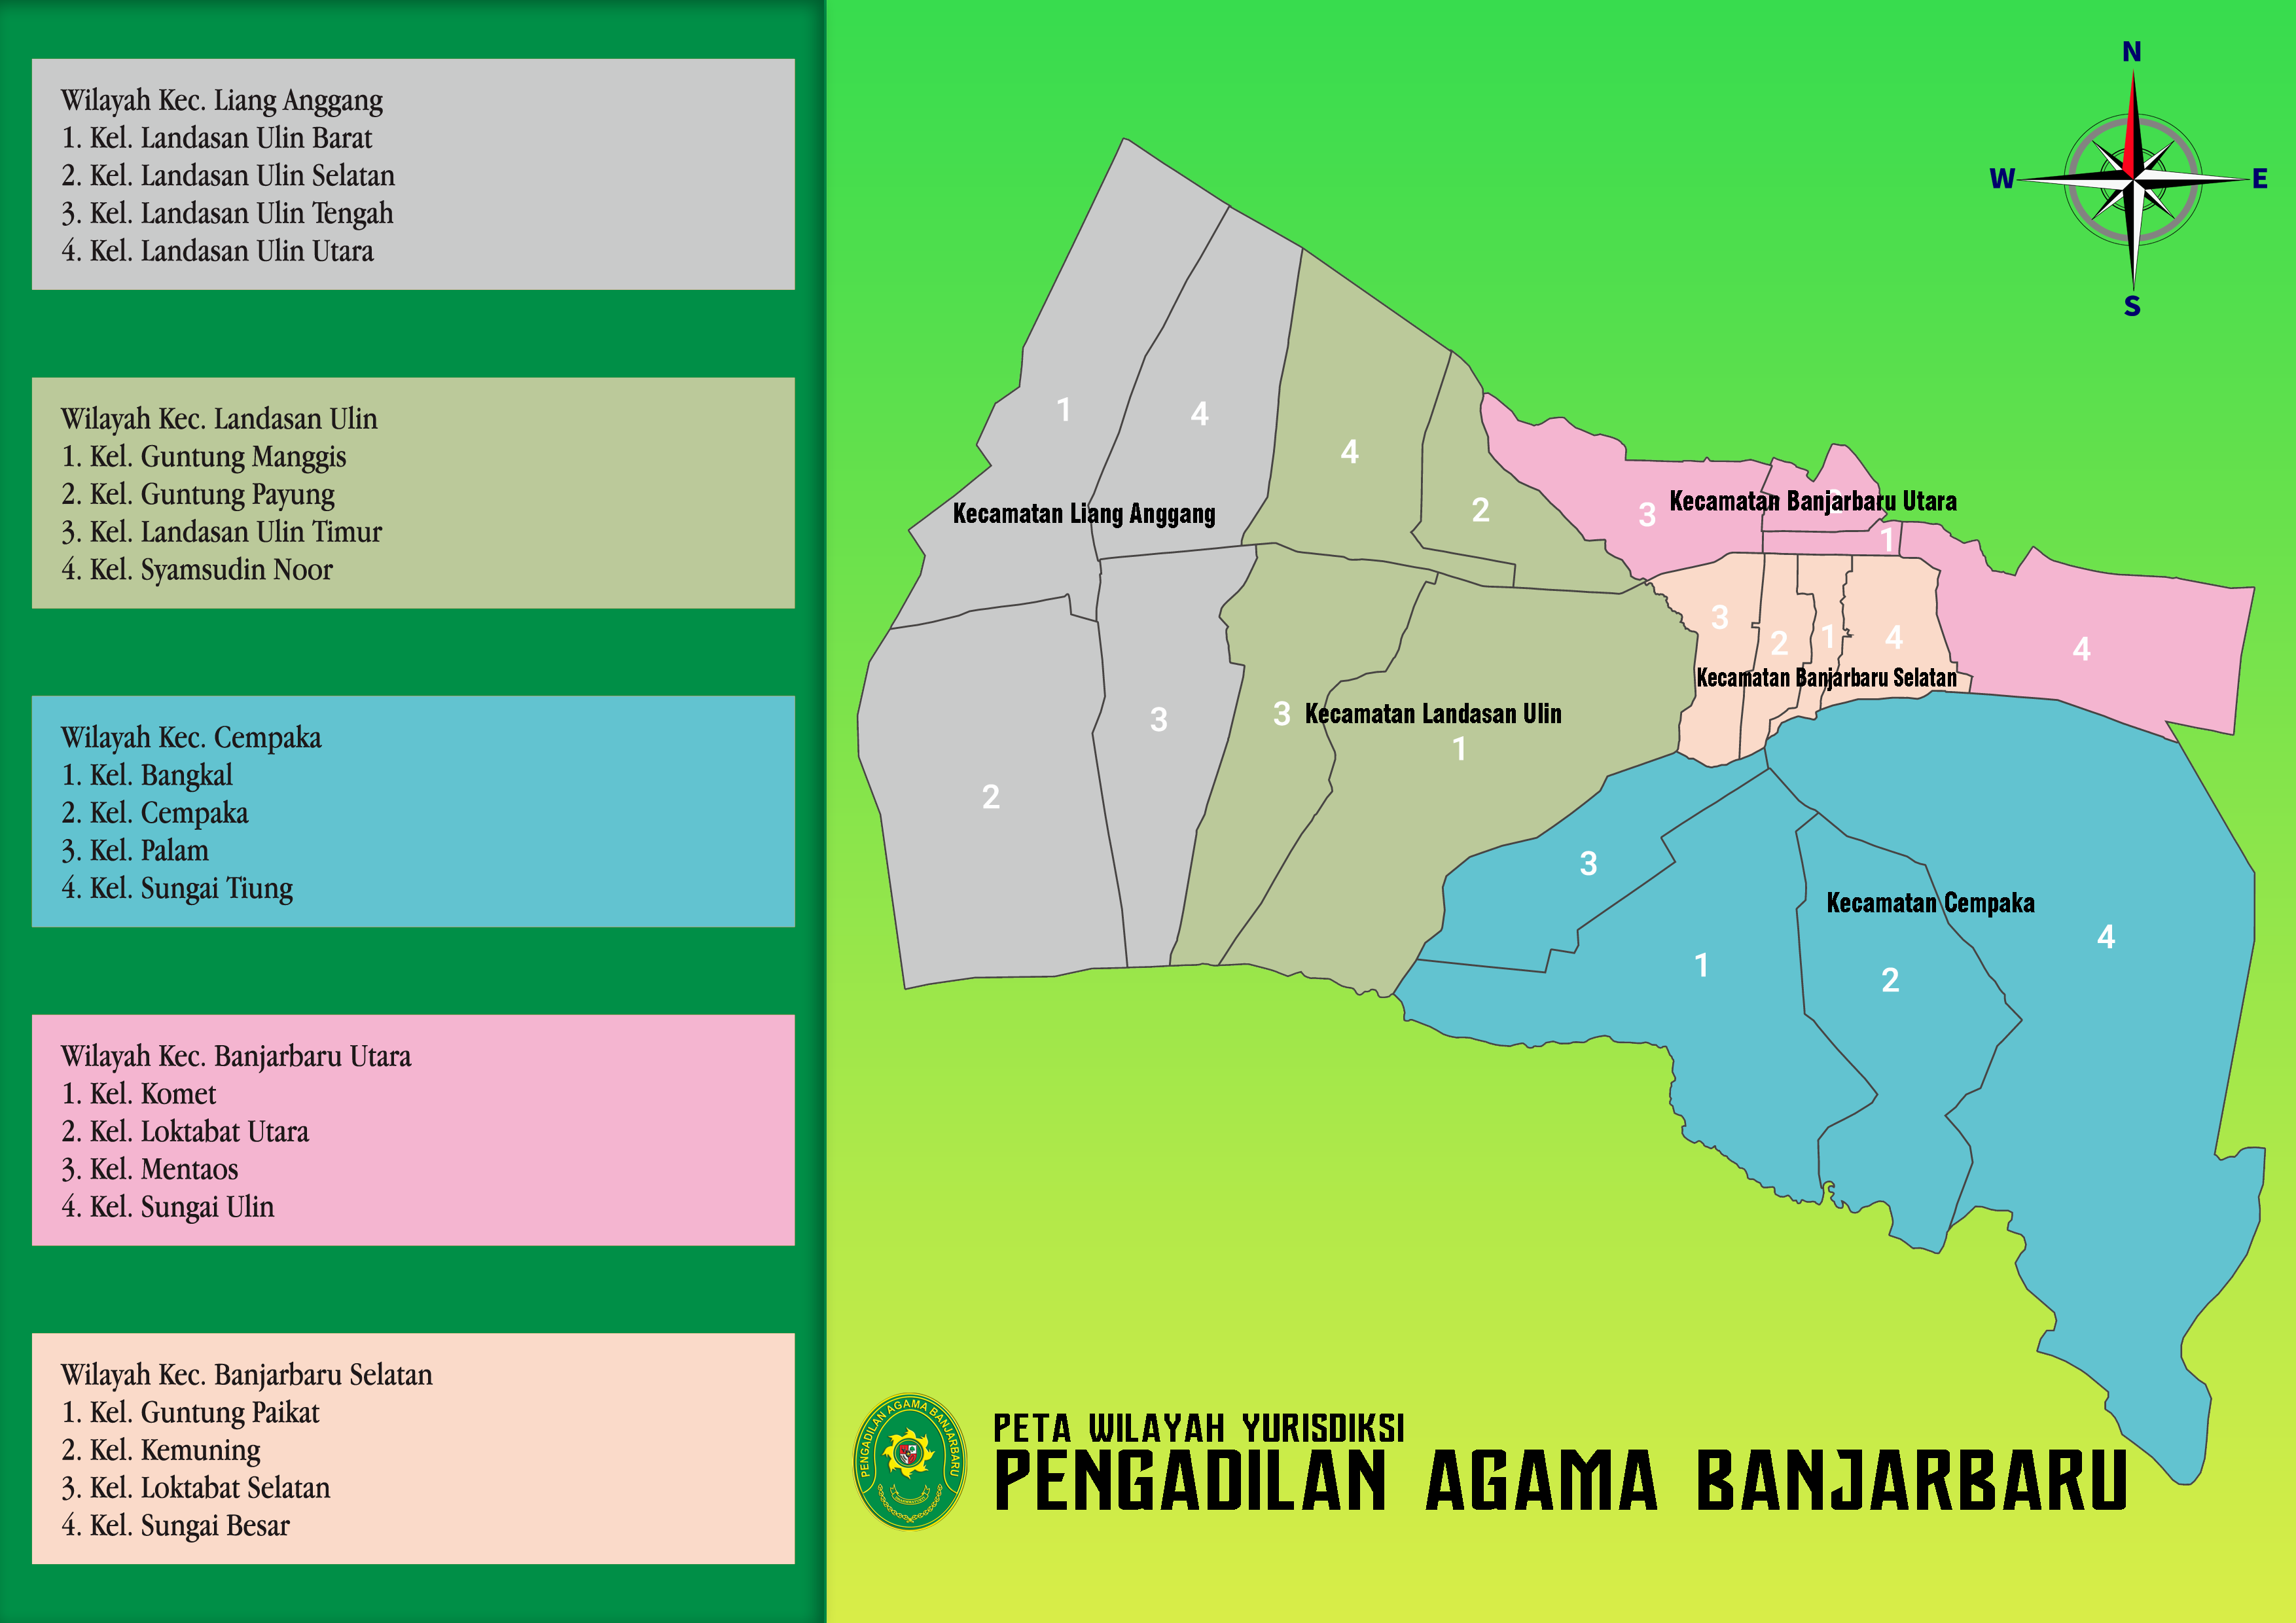 Peta Yurisdiksi PA Banjarbaru